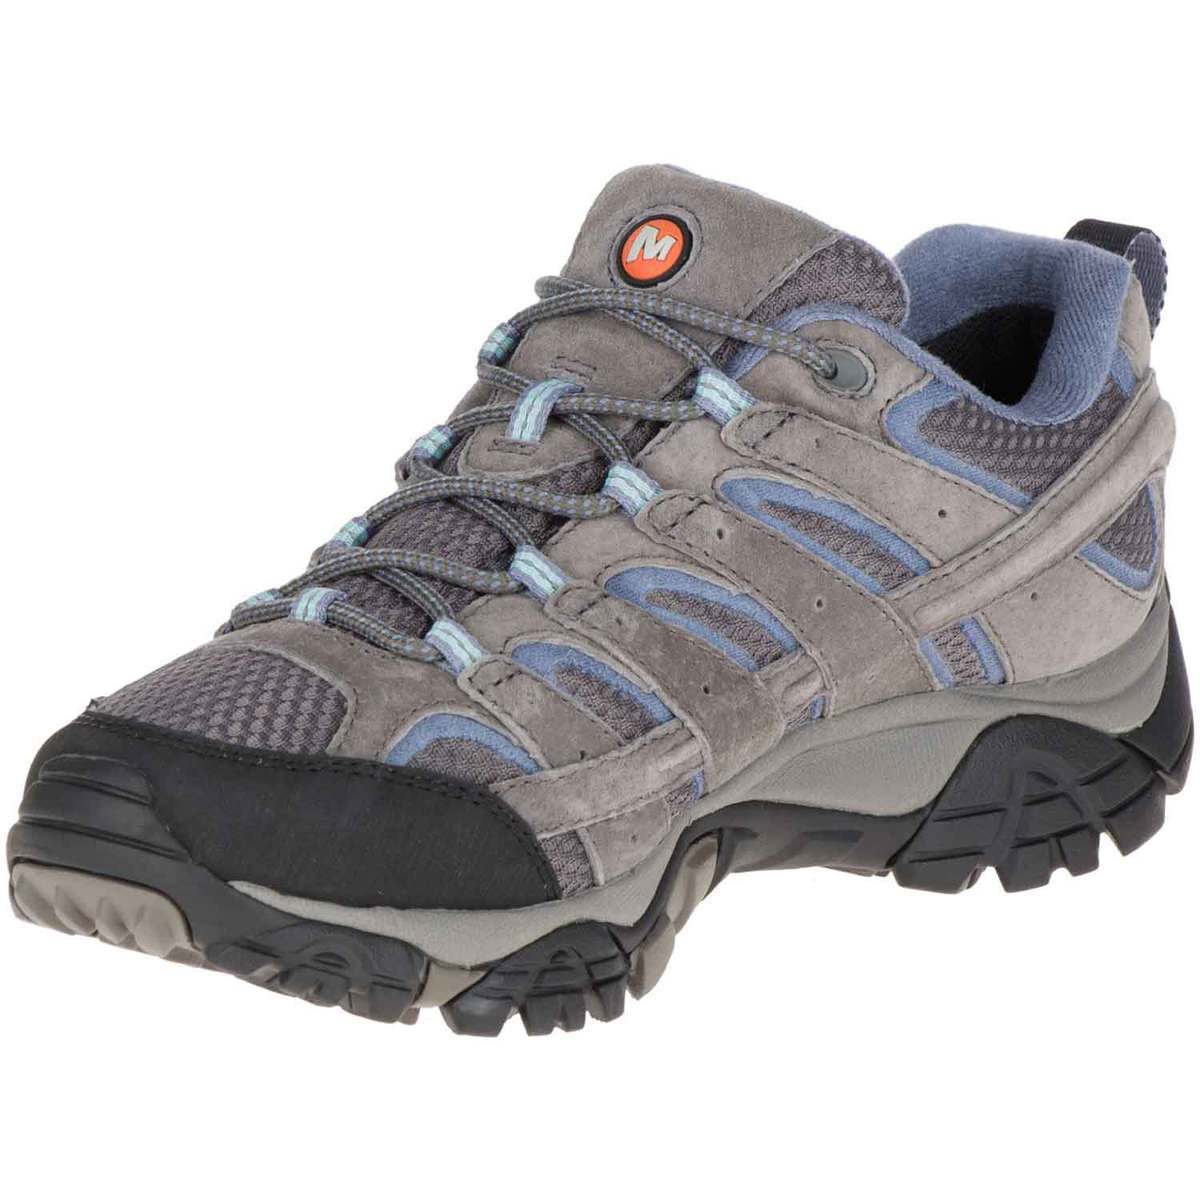 Merrell Women's Moab 2 Wide Waterproof Low Hiking Shoes - Granite ...